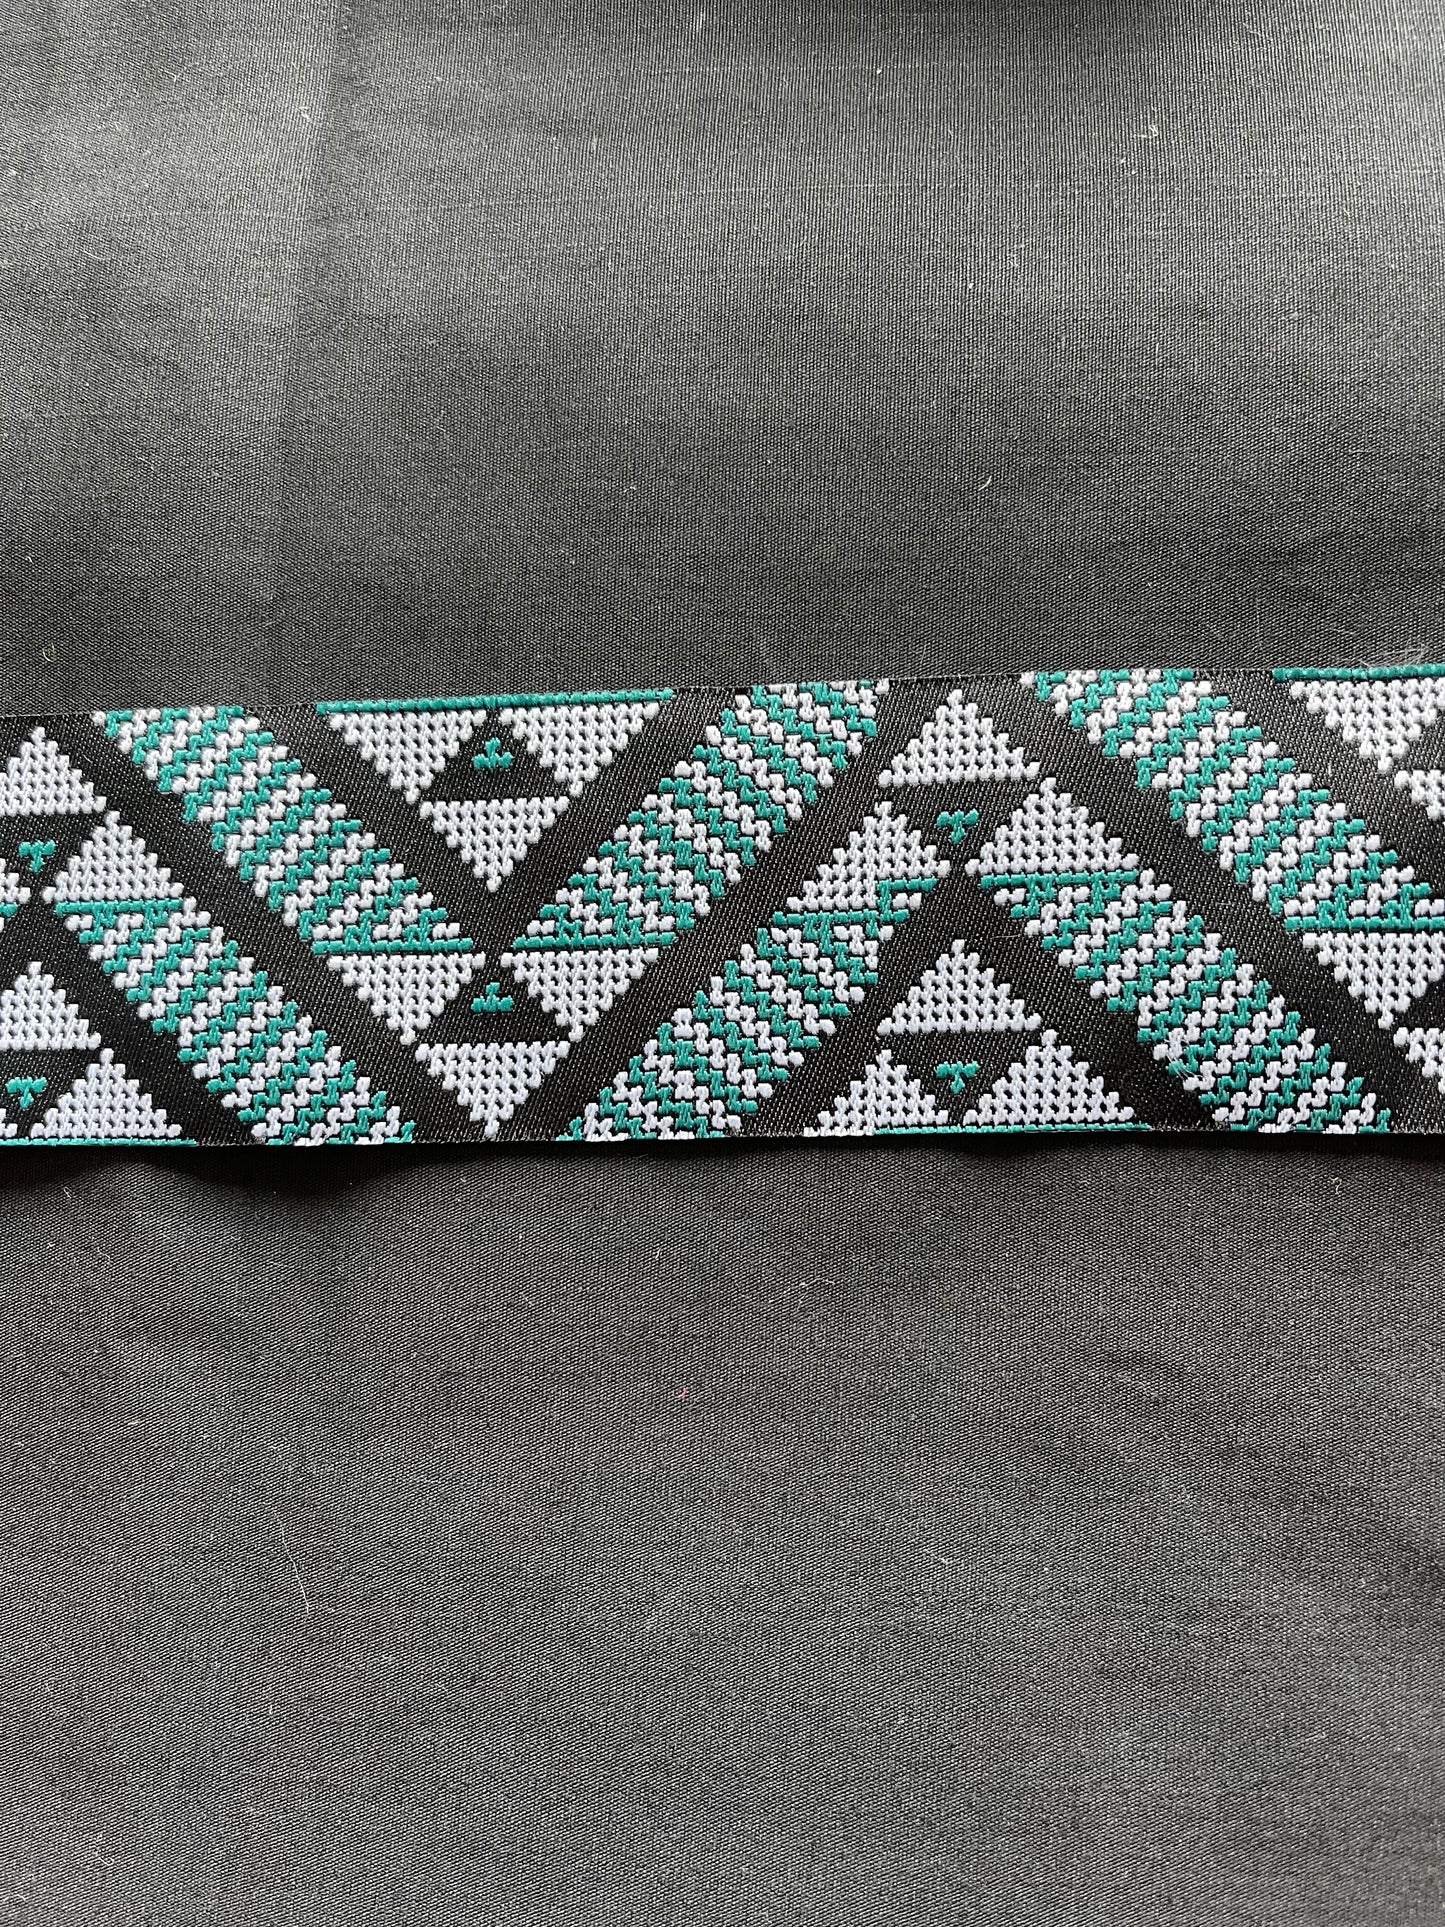 Maori design ribbon 2 and half mtrs long strips